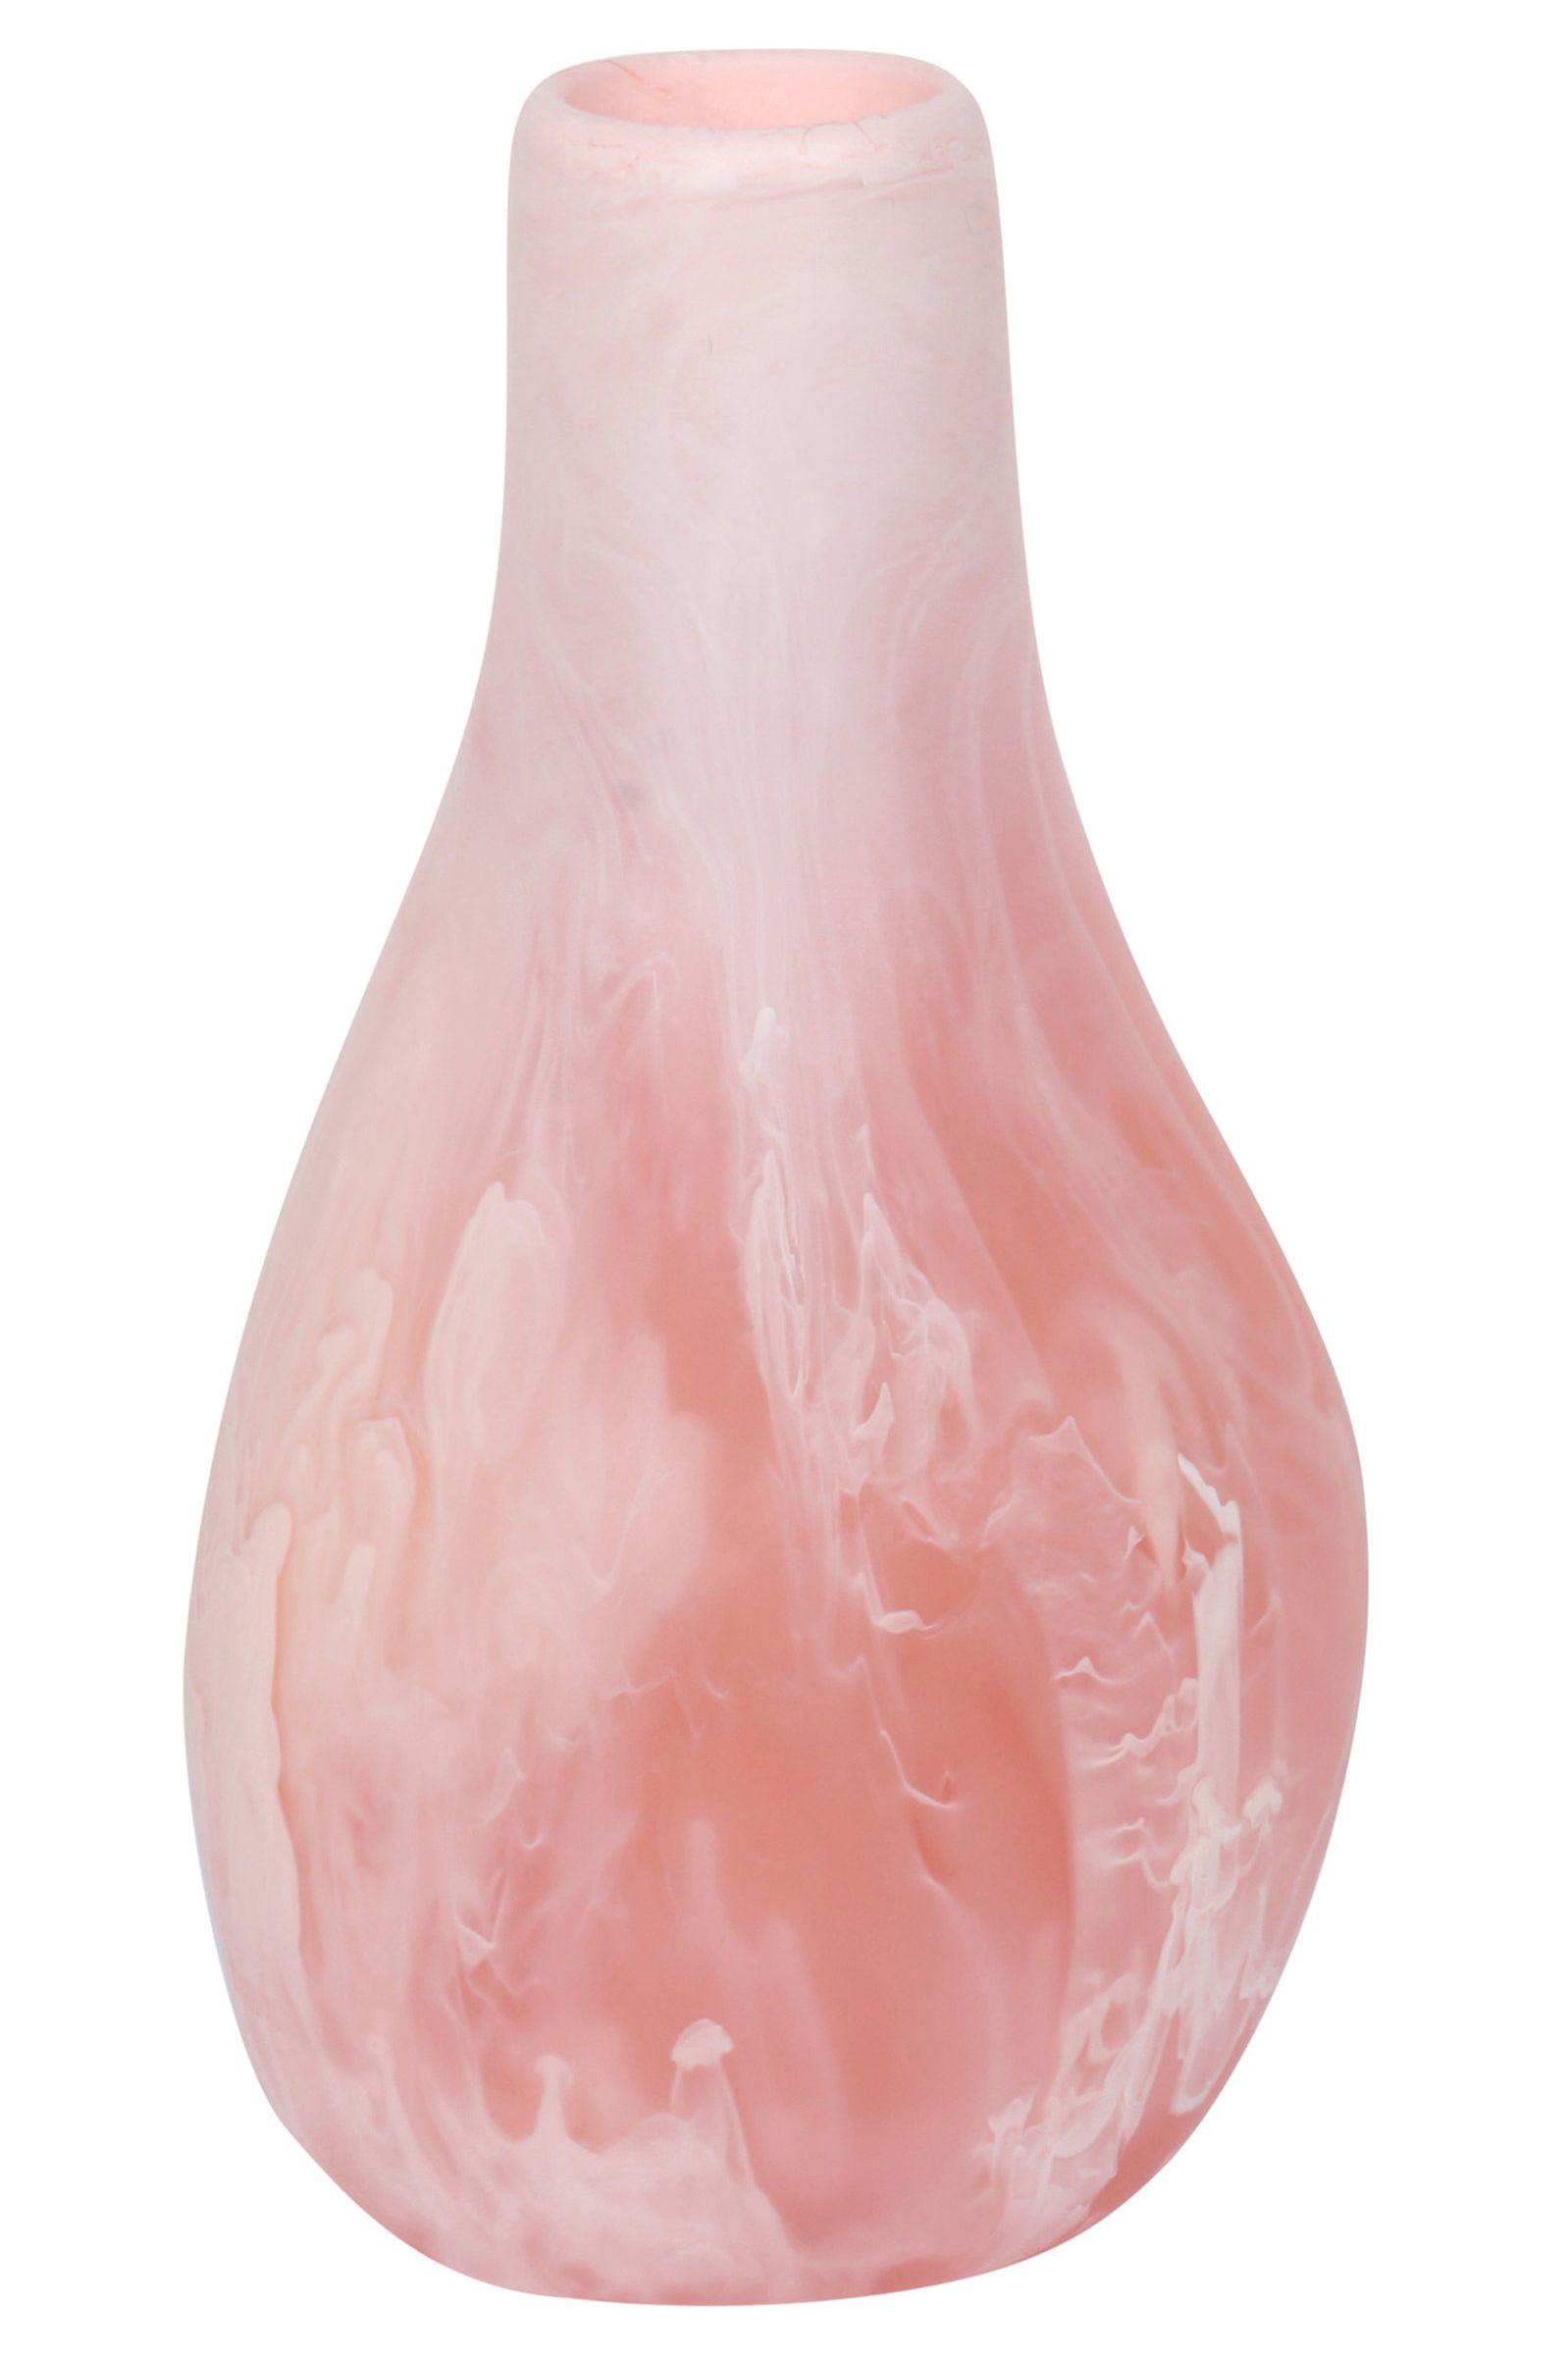 https://hips.hearstapps.com/vader-prod.s3.amazonaws.com/1590511639-large_dinosaur-designs-pink-medium-liquid-pink-marbled-resin-vase.jpg?crop=1.00xw:0.937xh;0,0.0350xh